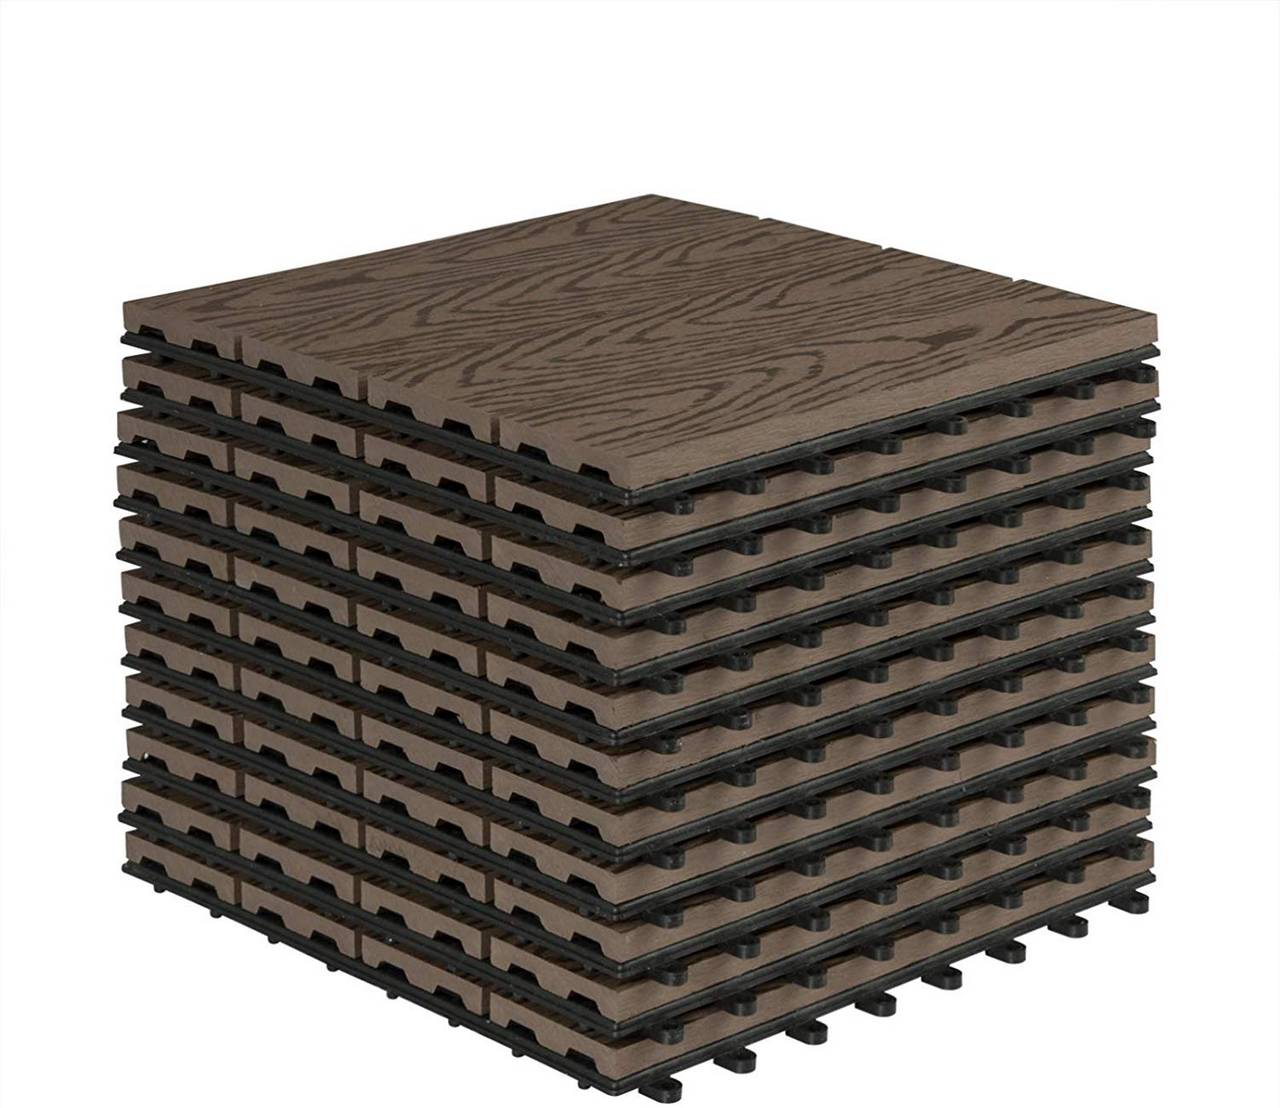 Terrassenfliesen Wpc Inspirierend Wpc Posite Decking Tiles Set Of 11 Interlocking Woodgrain Terrace Tiles Flooring with System